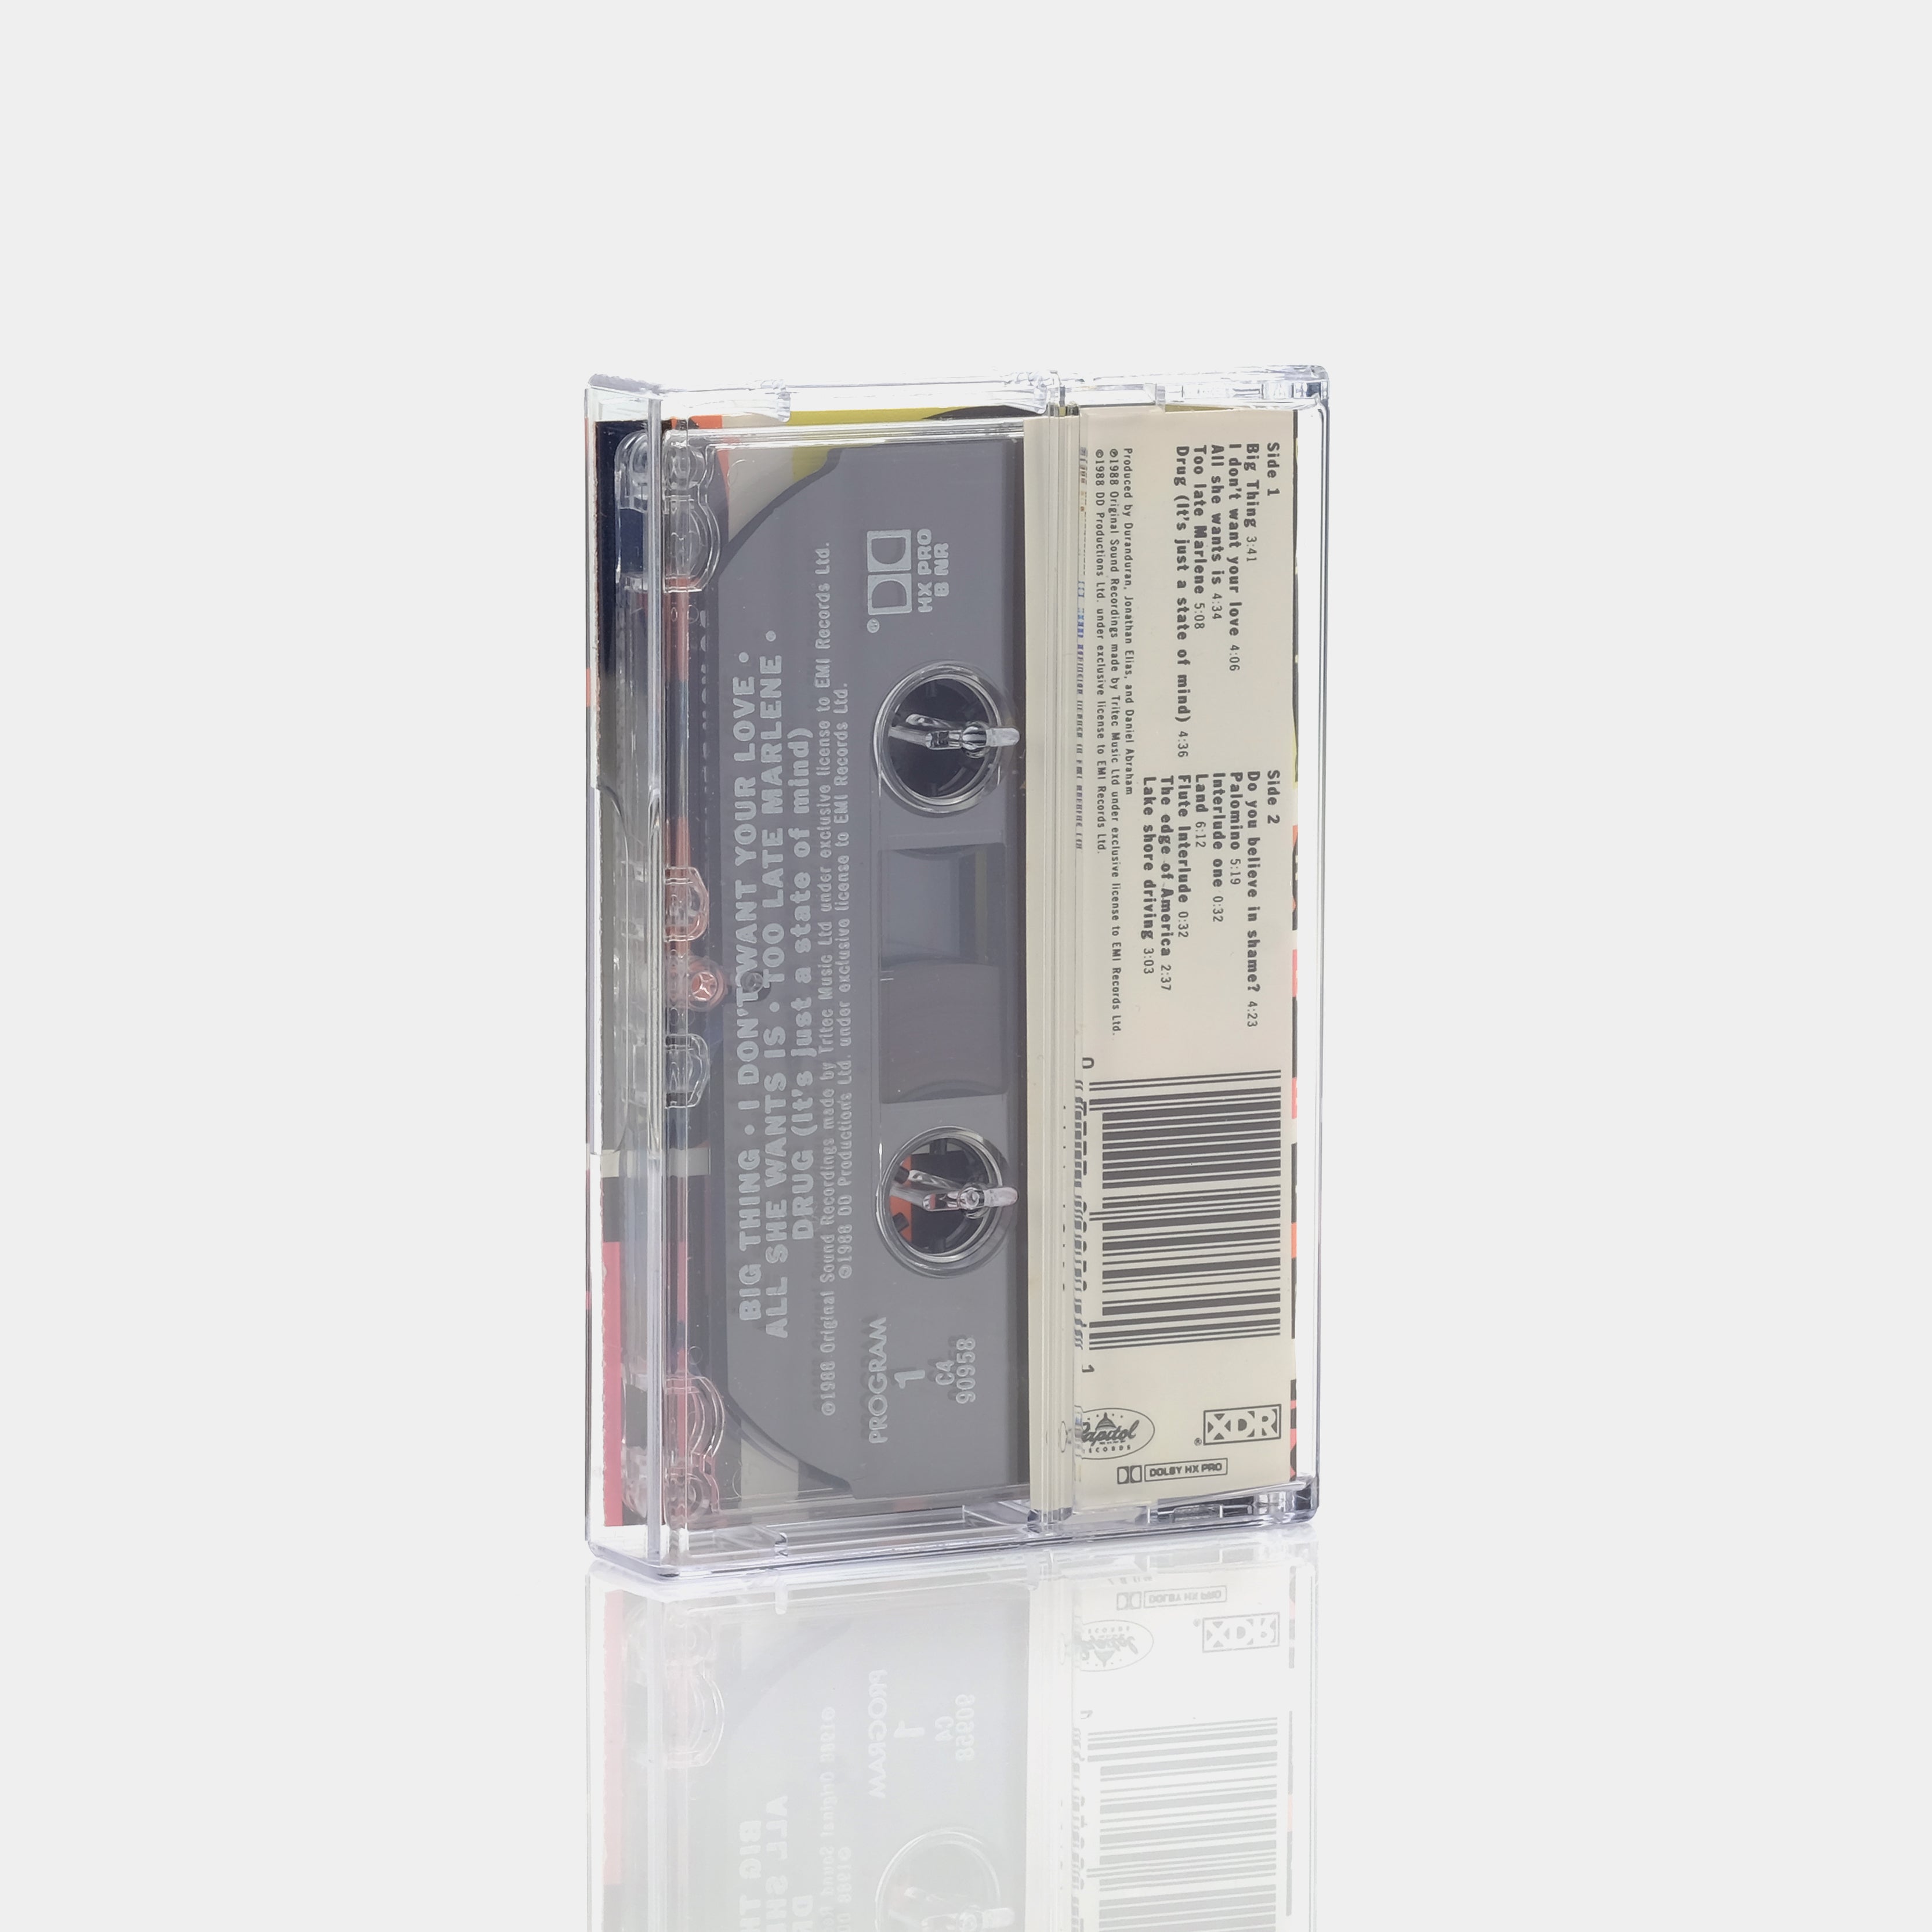 Duran Duran - Big Thing Cassette Tape